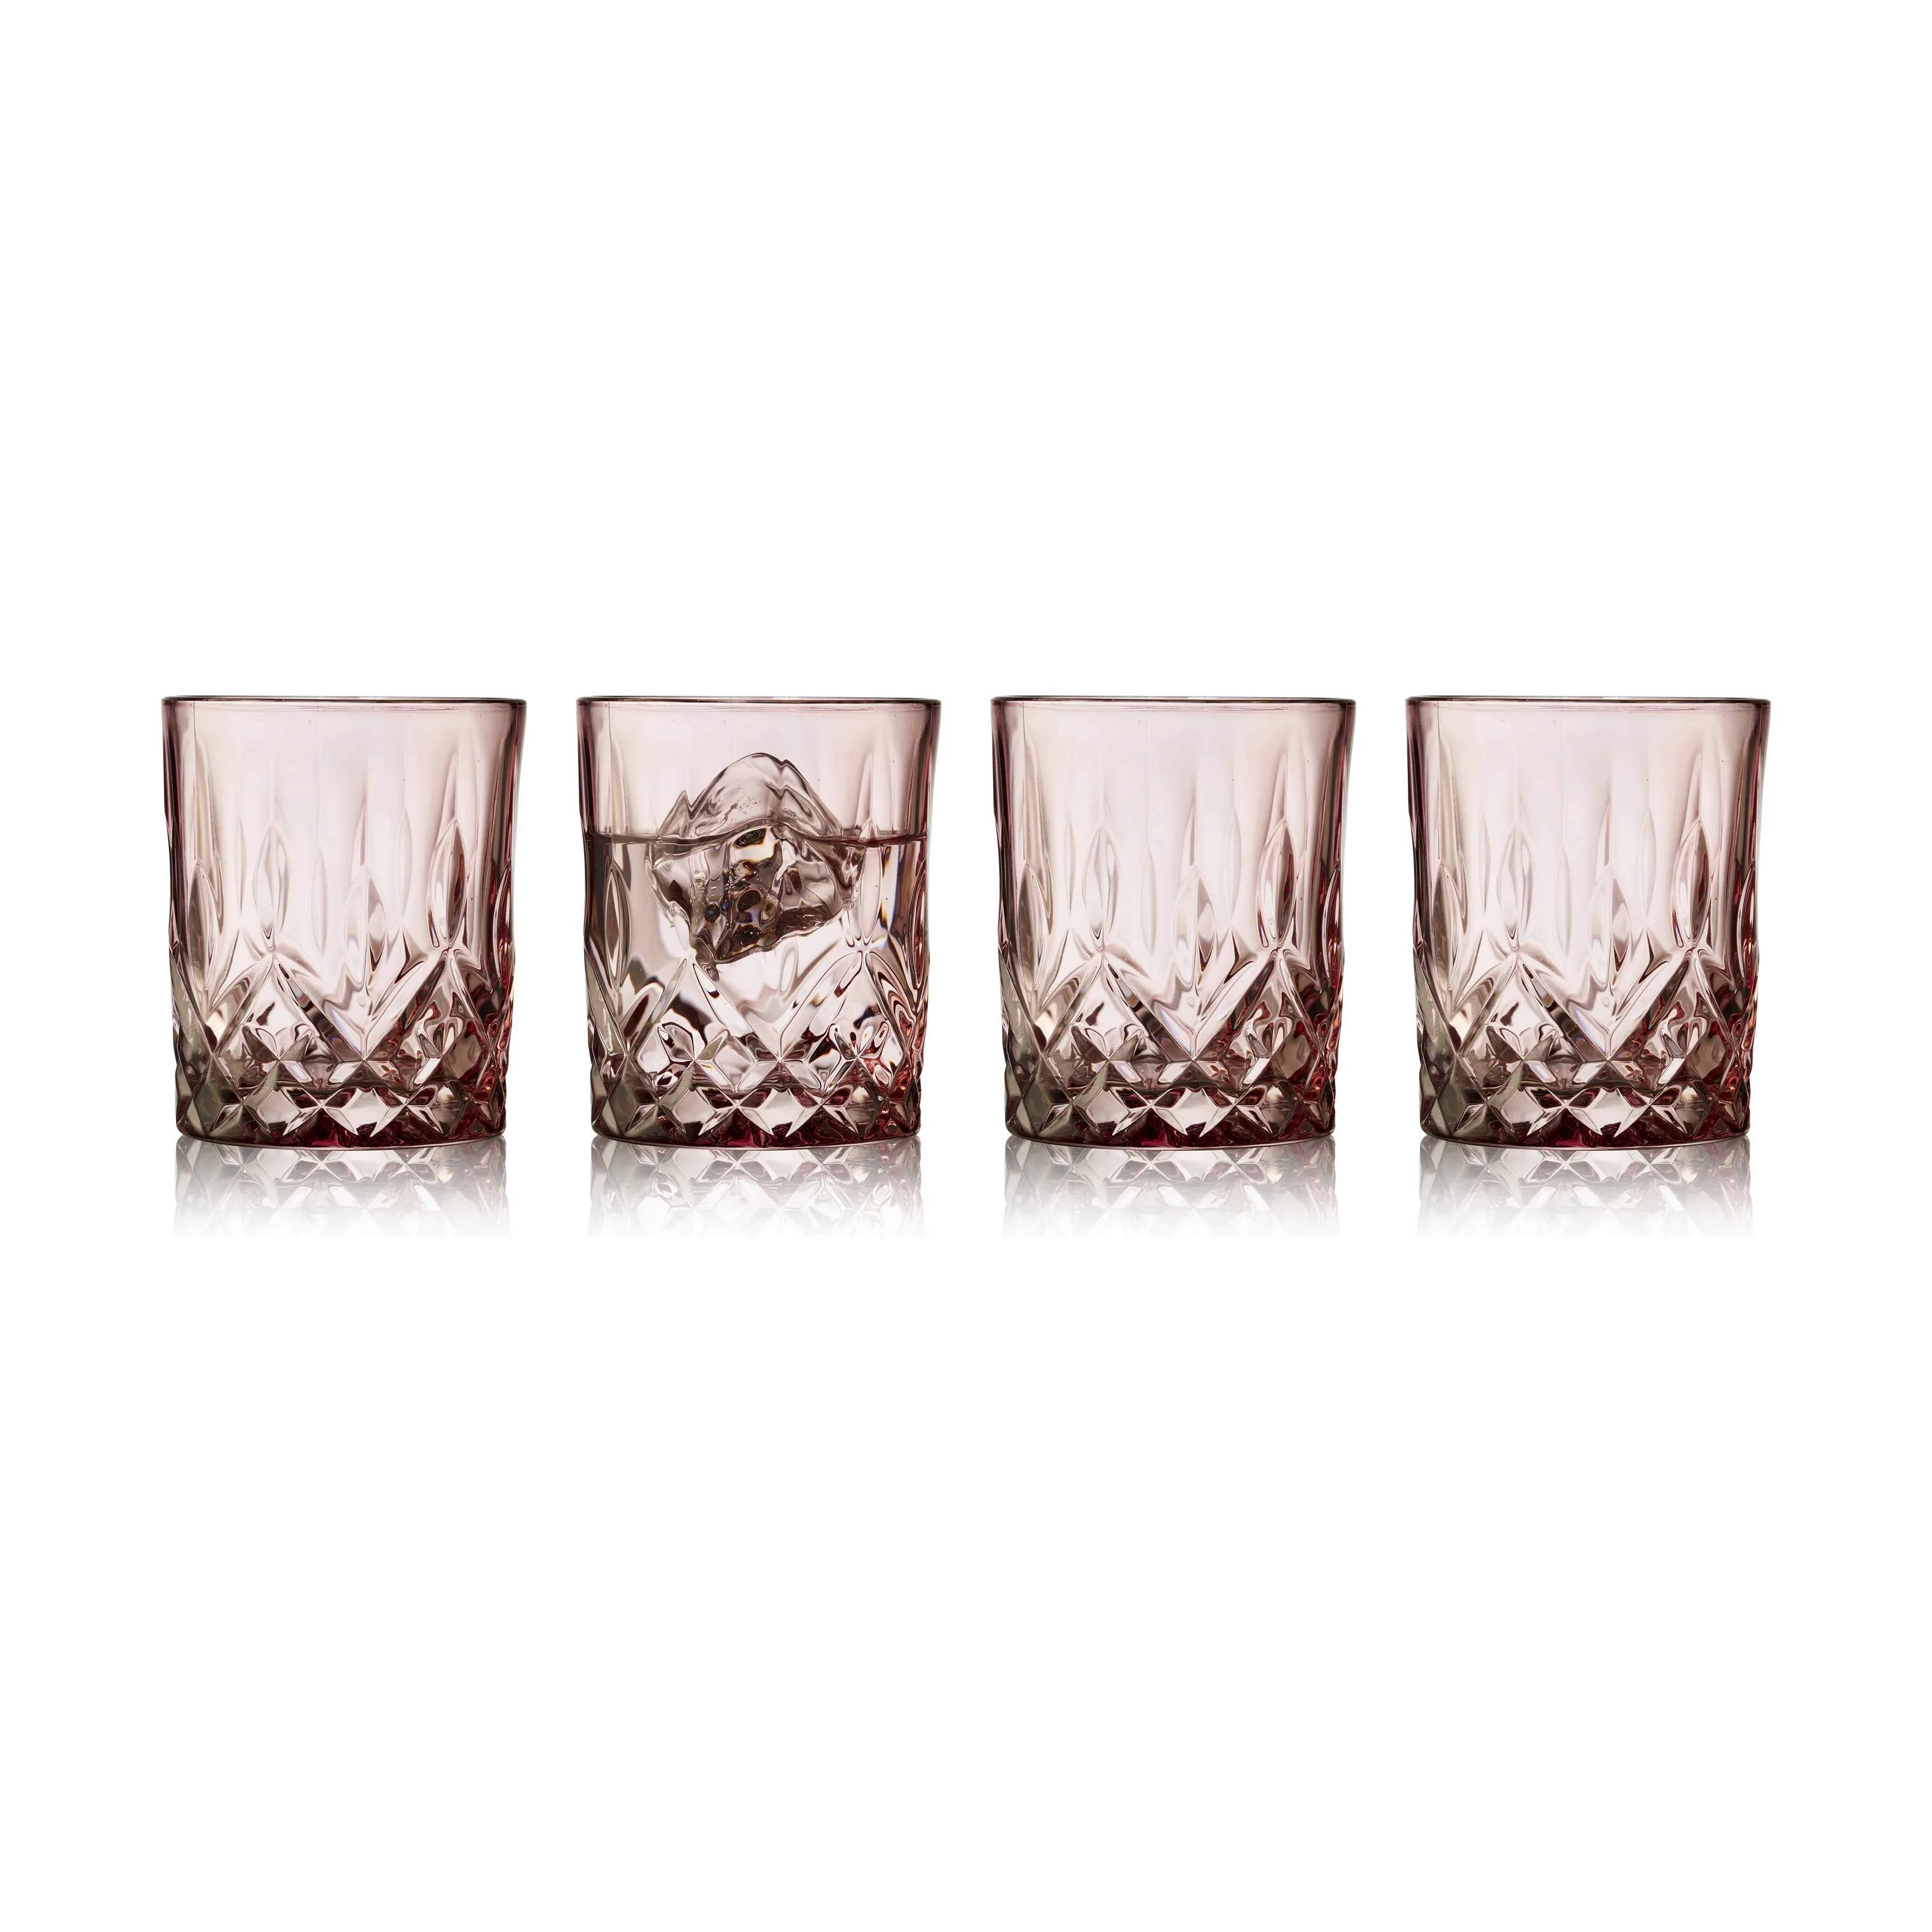 Sorrento Whiskyglas - 4 stk., pink, large